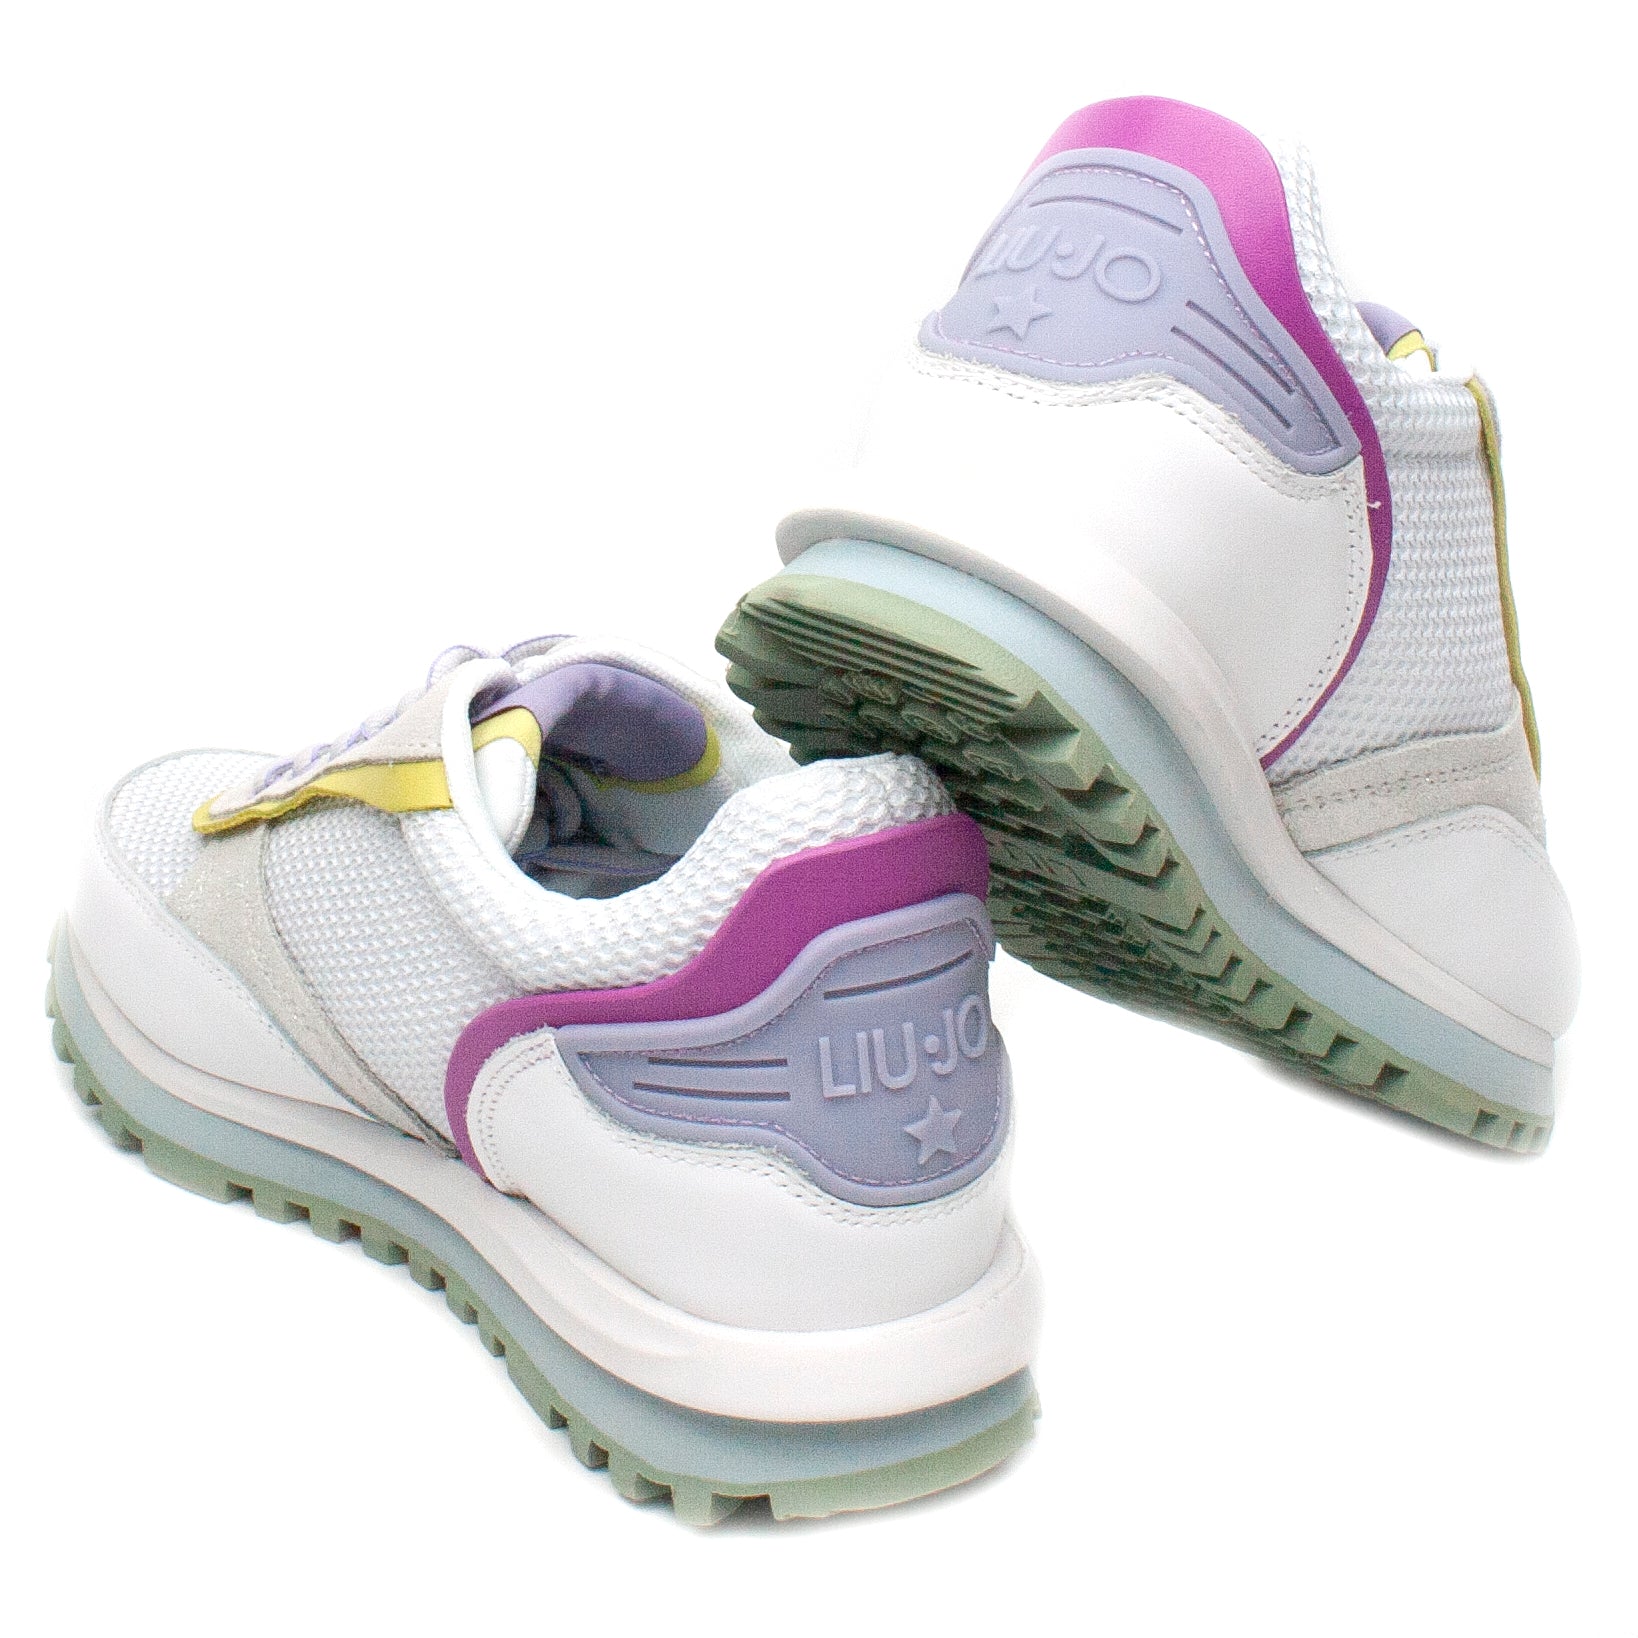 Liu Jo Sneakers dama WONDER UP 03 BA2111PX02701111 alb ID2833-ALB